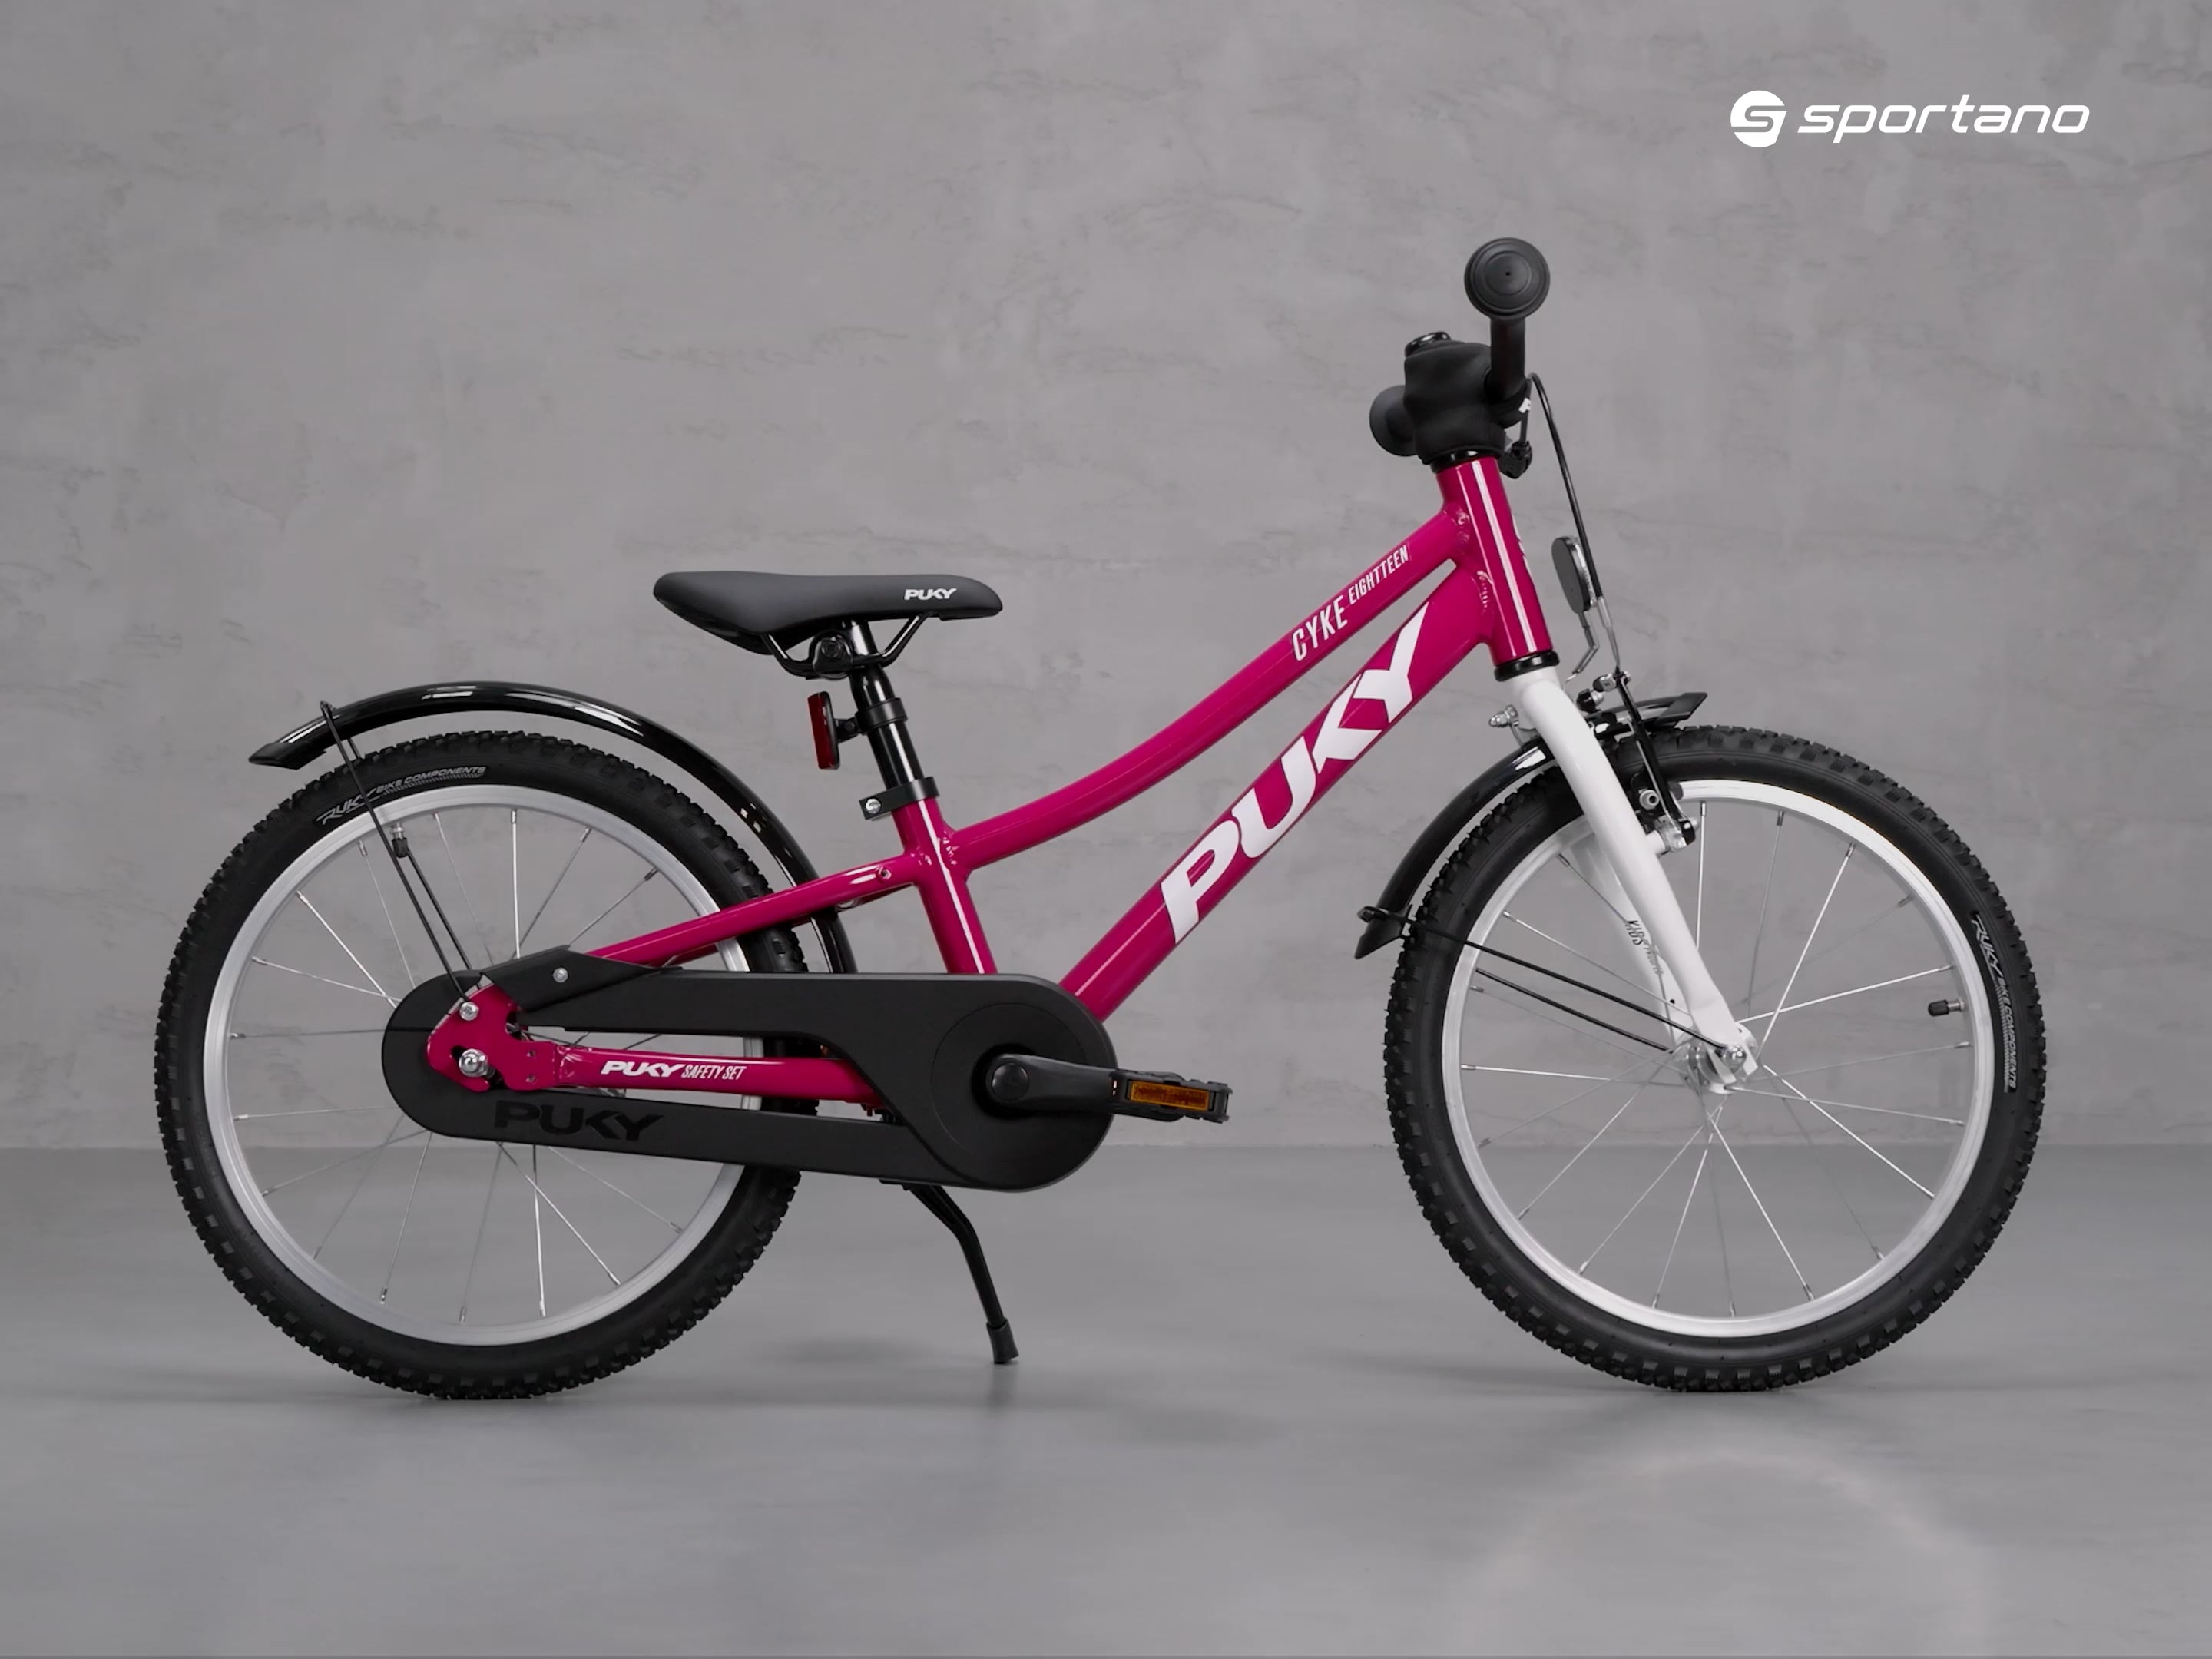 PUKY Cyke 18 biciclete pentru copii roz și alb 4404